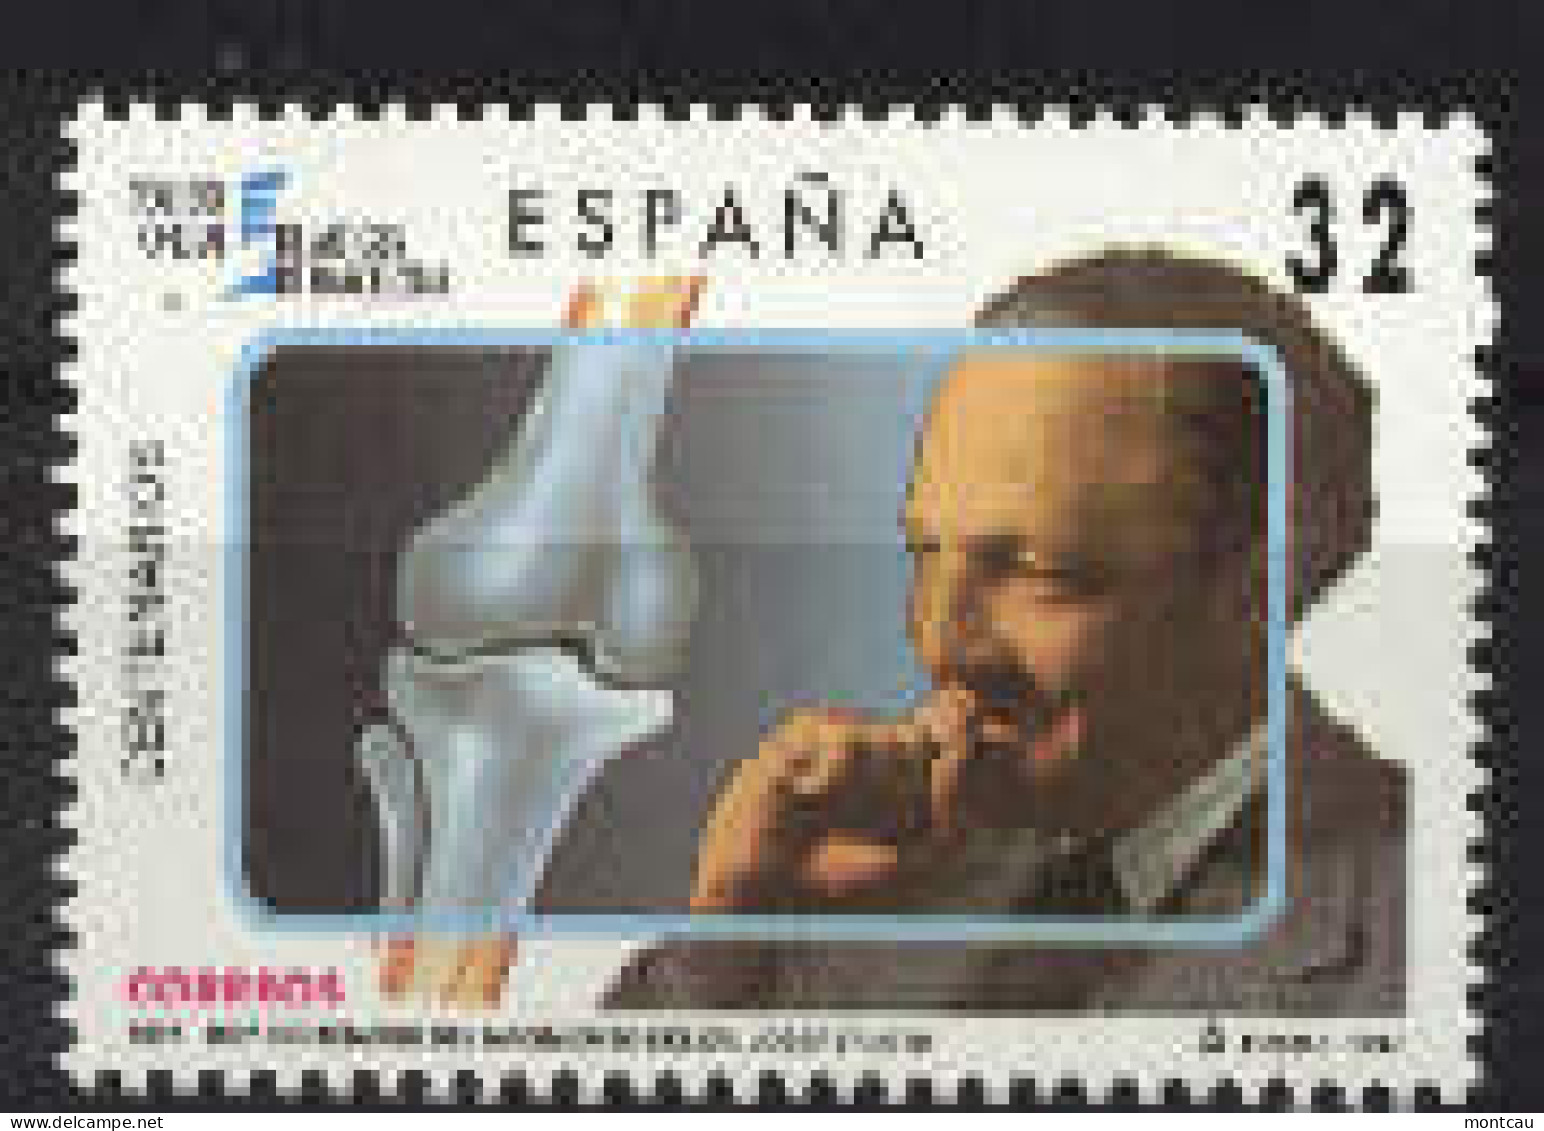 Spain 1997. Dr. Trueta. Ed 3481 (**) - Medicine